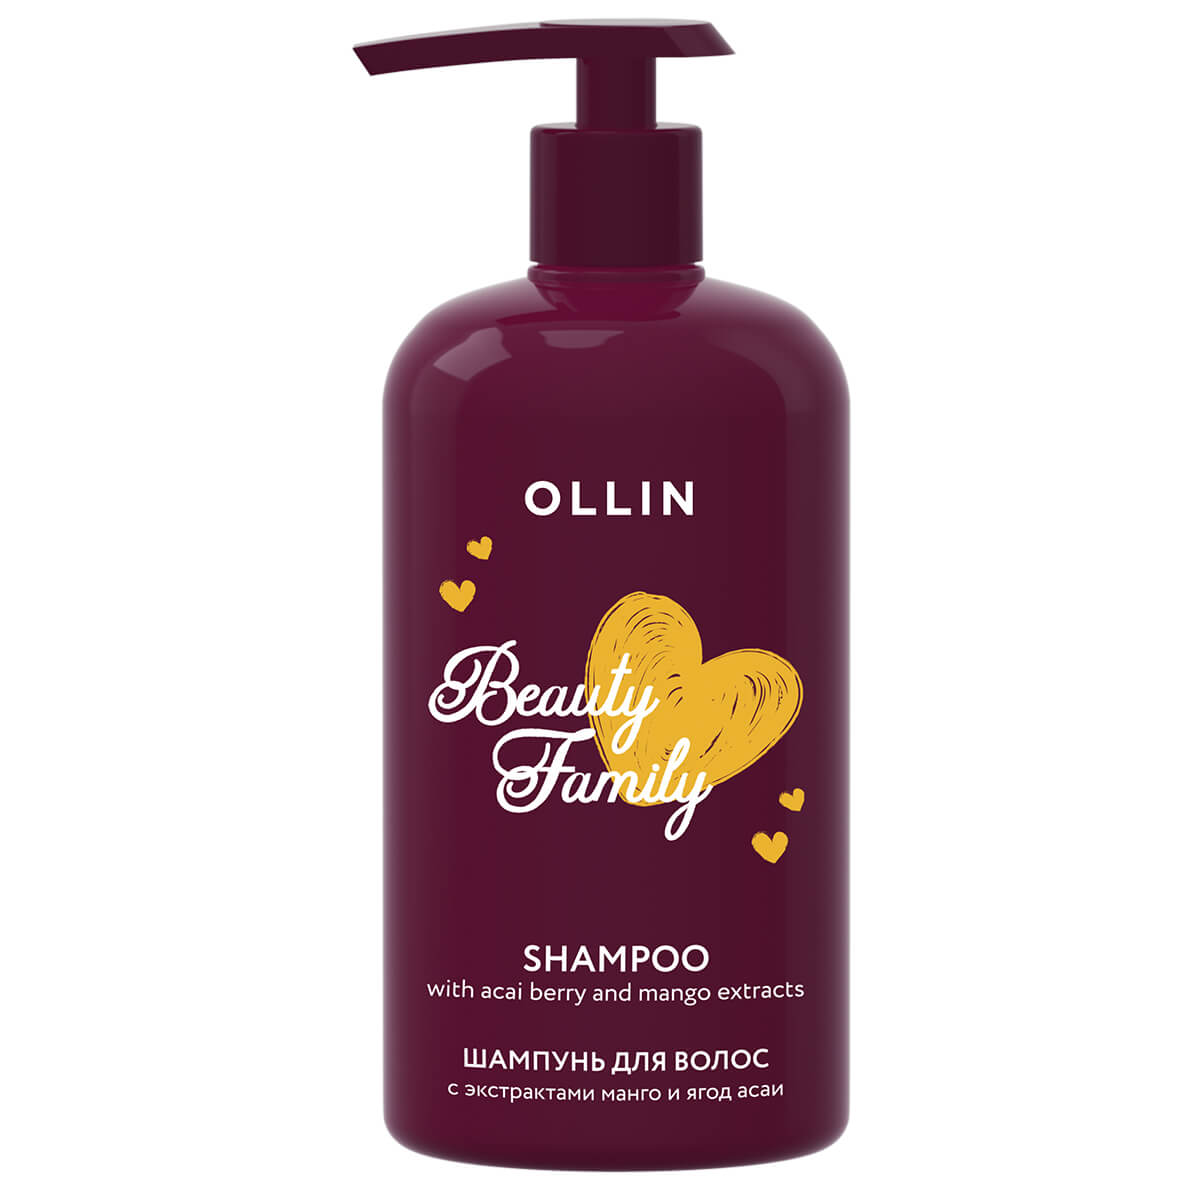 Beauty Family  Шампунь для волос с экстрактами манго и ягод асаи, 500 мл, OLLIN